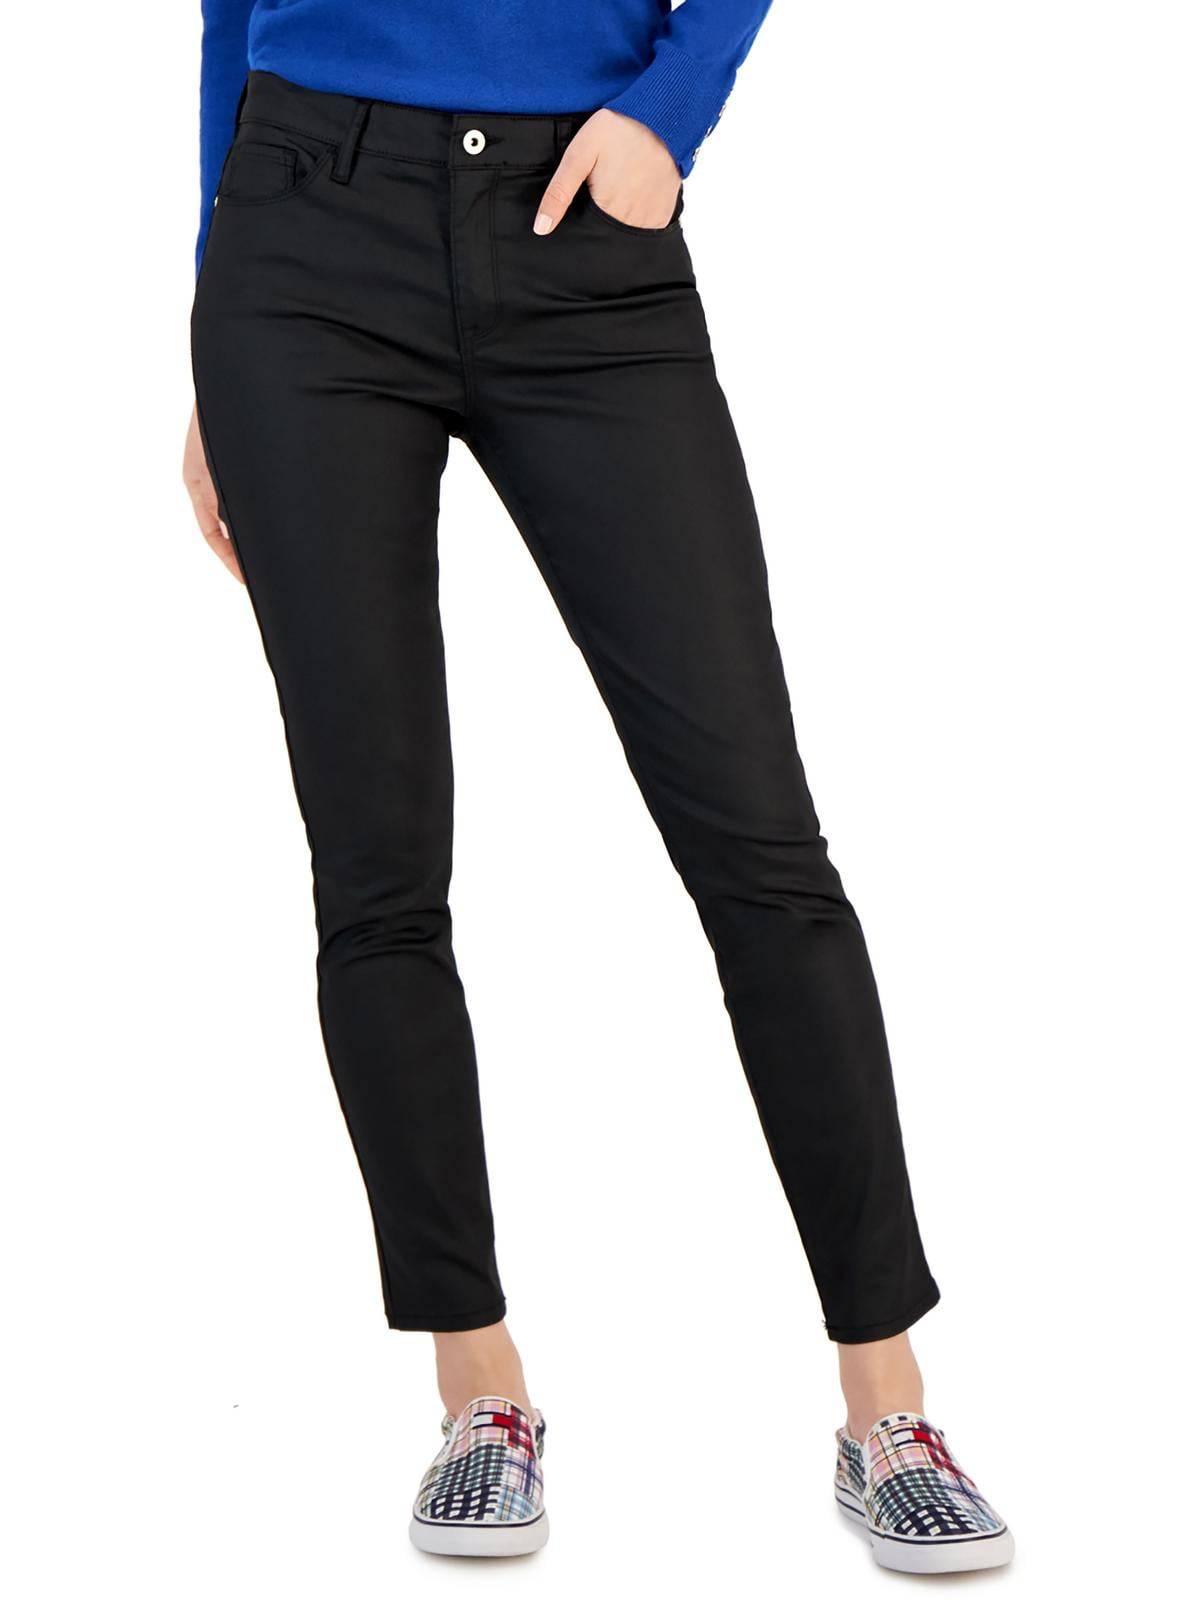 Tommy Hilfiger Women\'s Coated Skinny Ankle Jeans Black Size 14